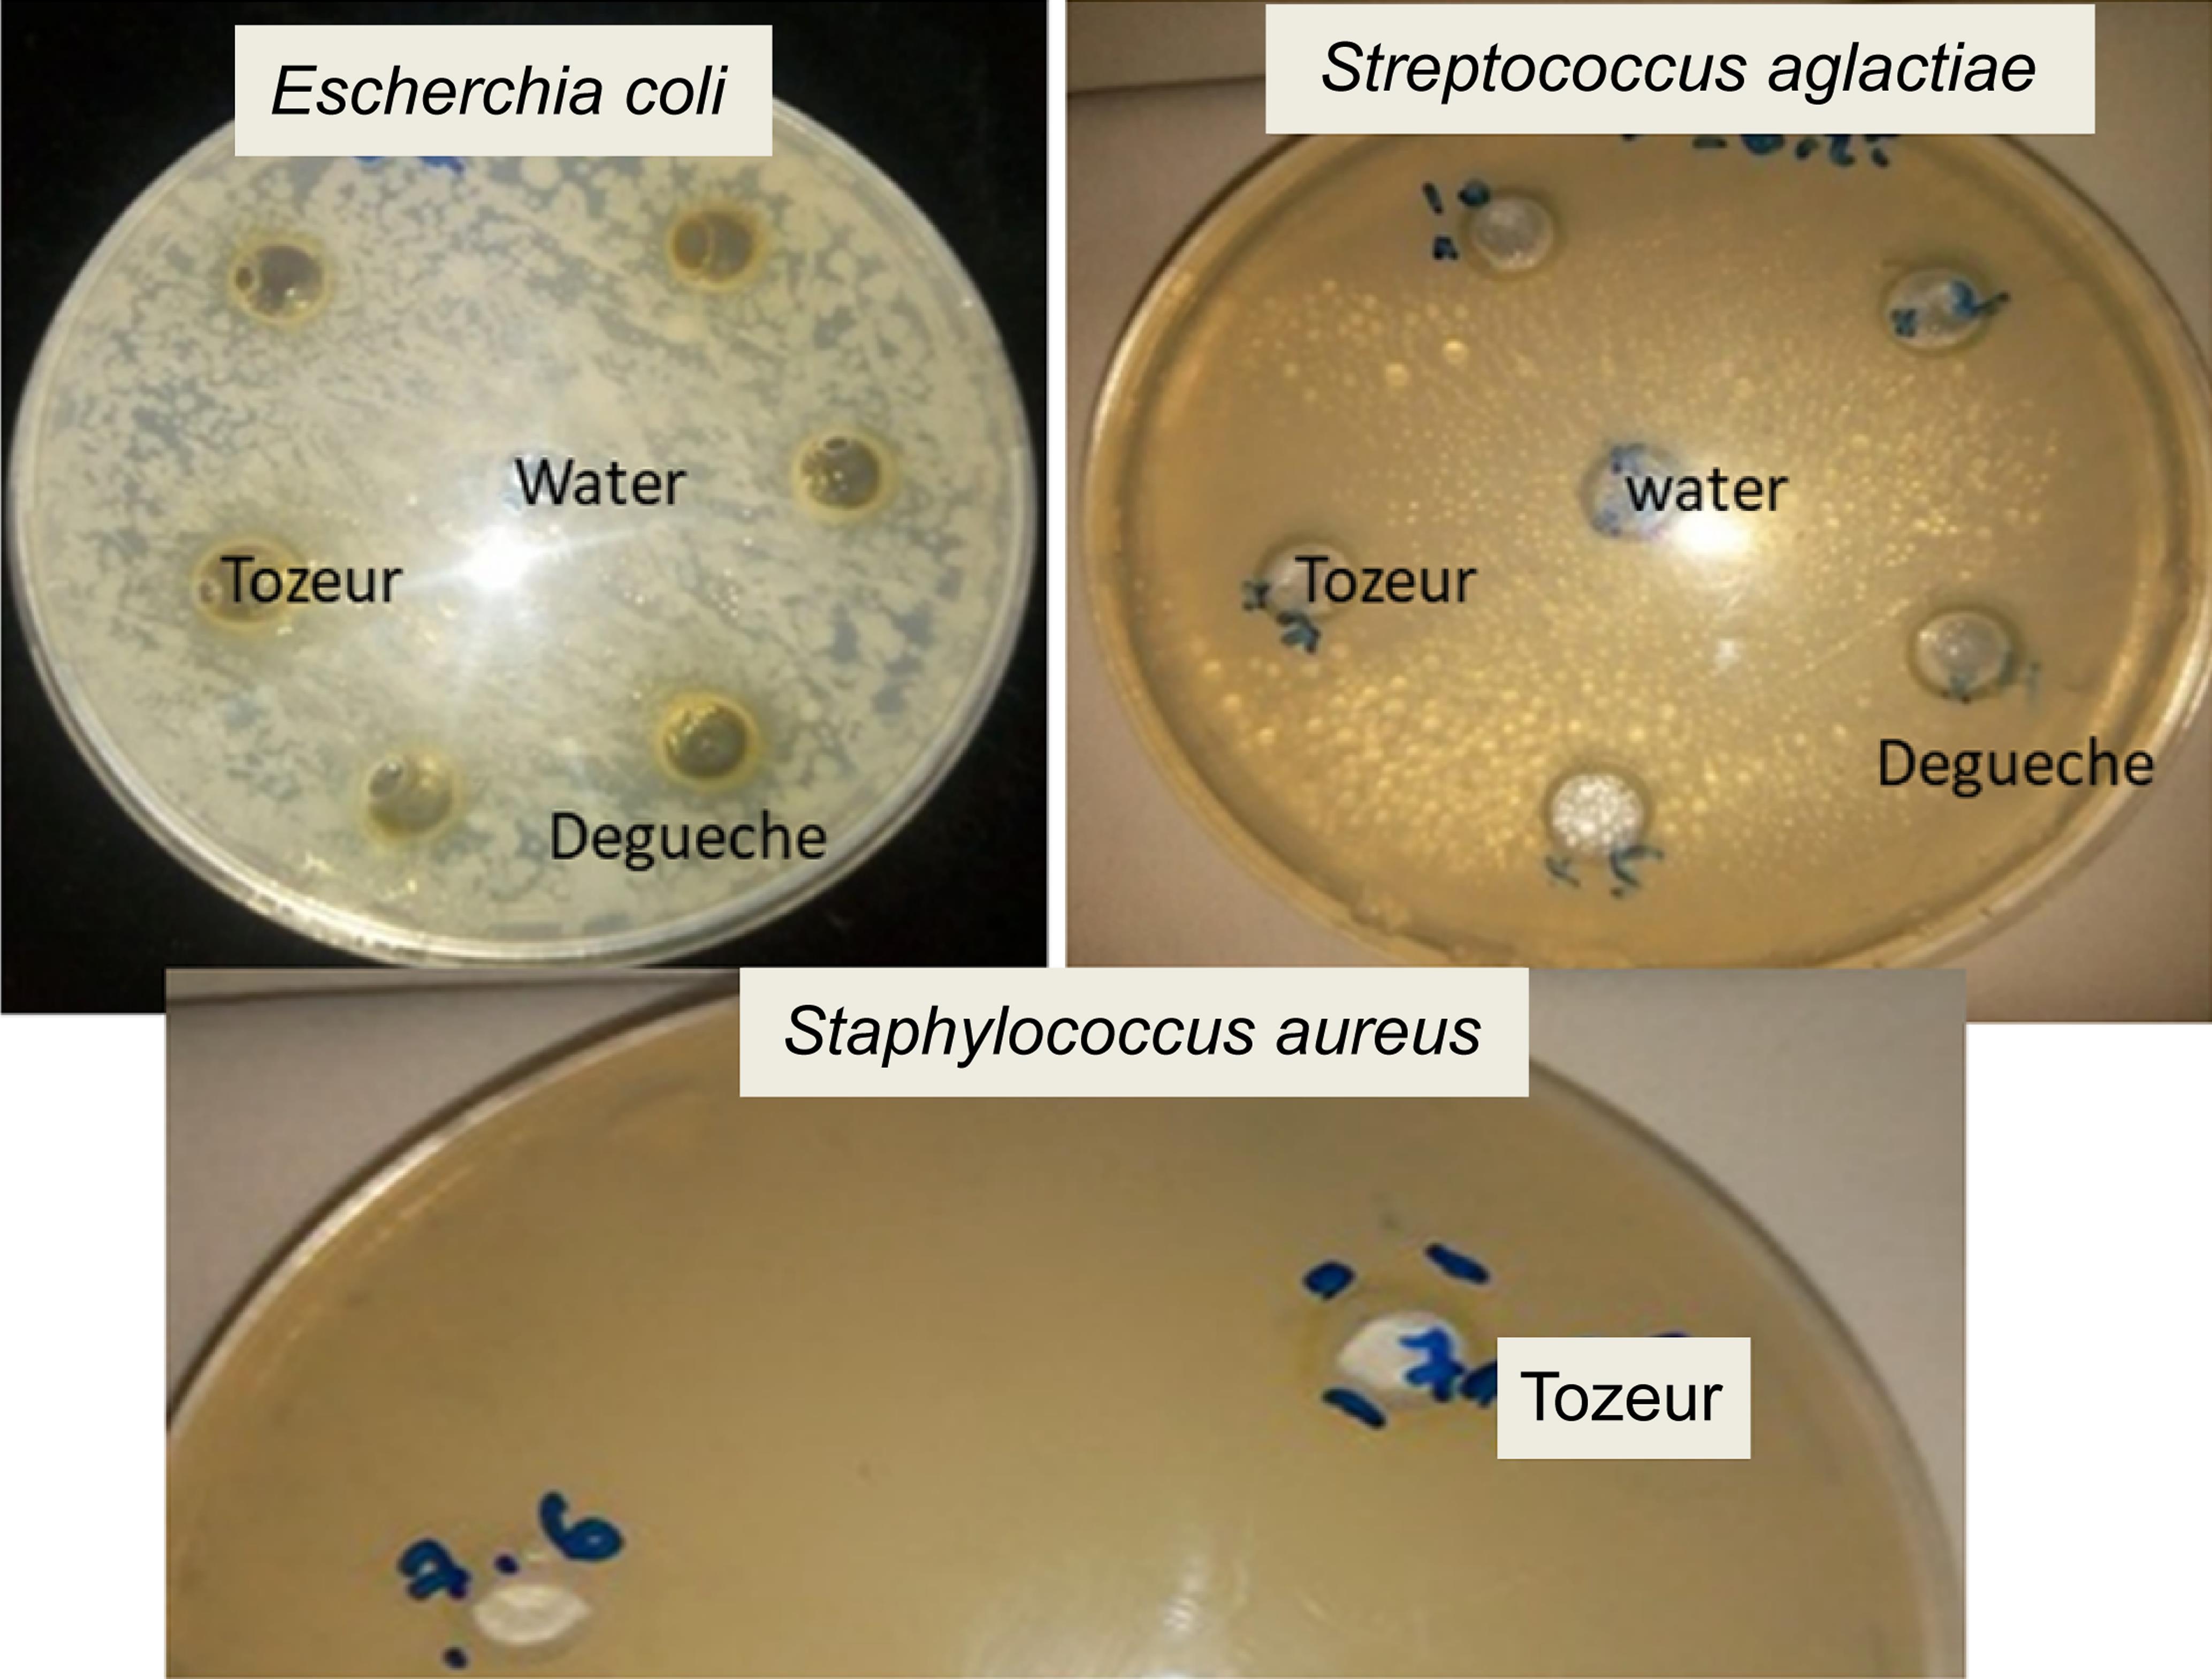 Agar well diffusion method analysis of antibacterial activities of three <italic>Z. spina-christi</italic> extracts.